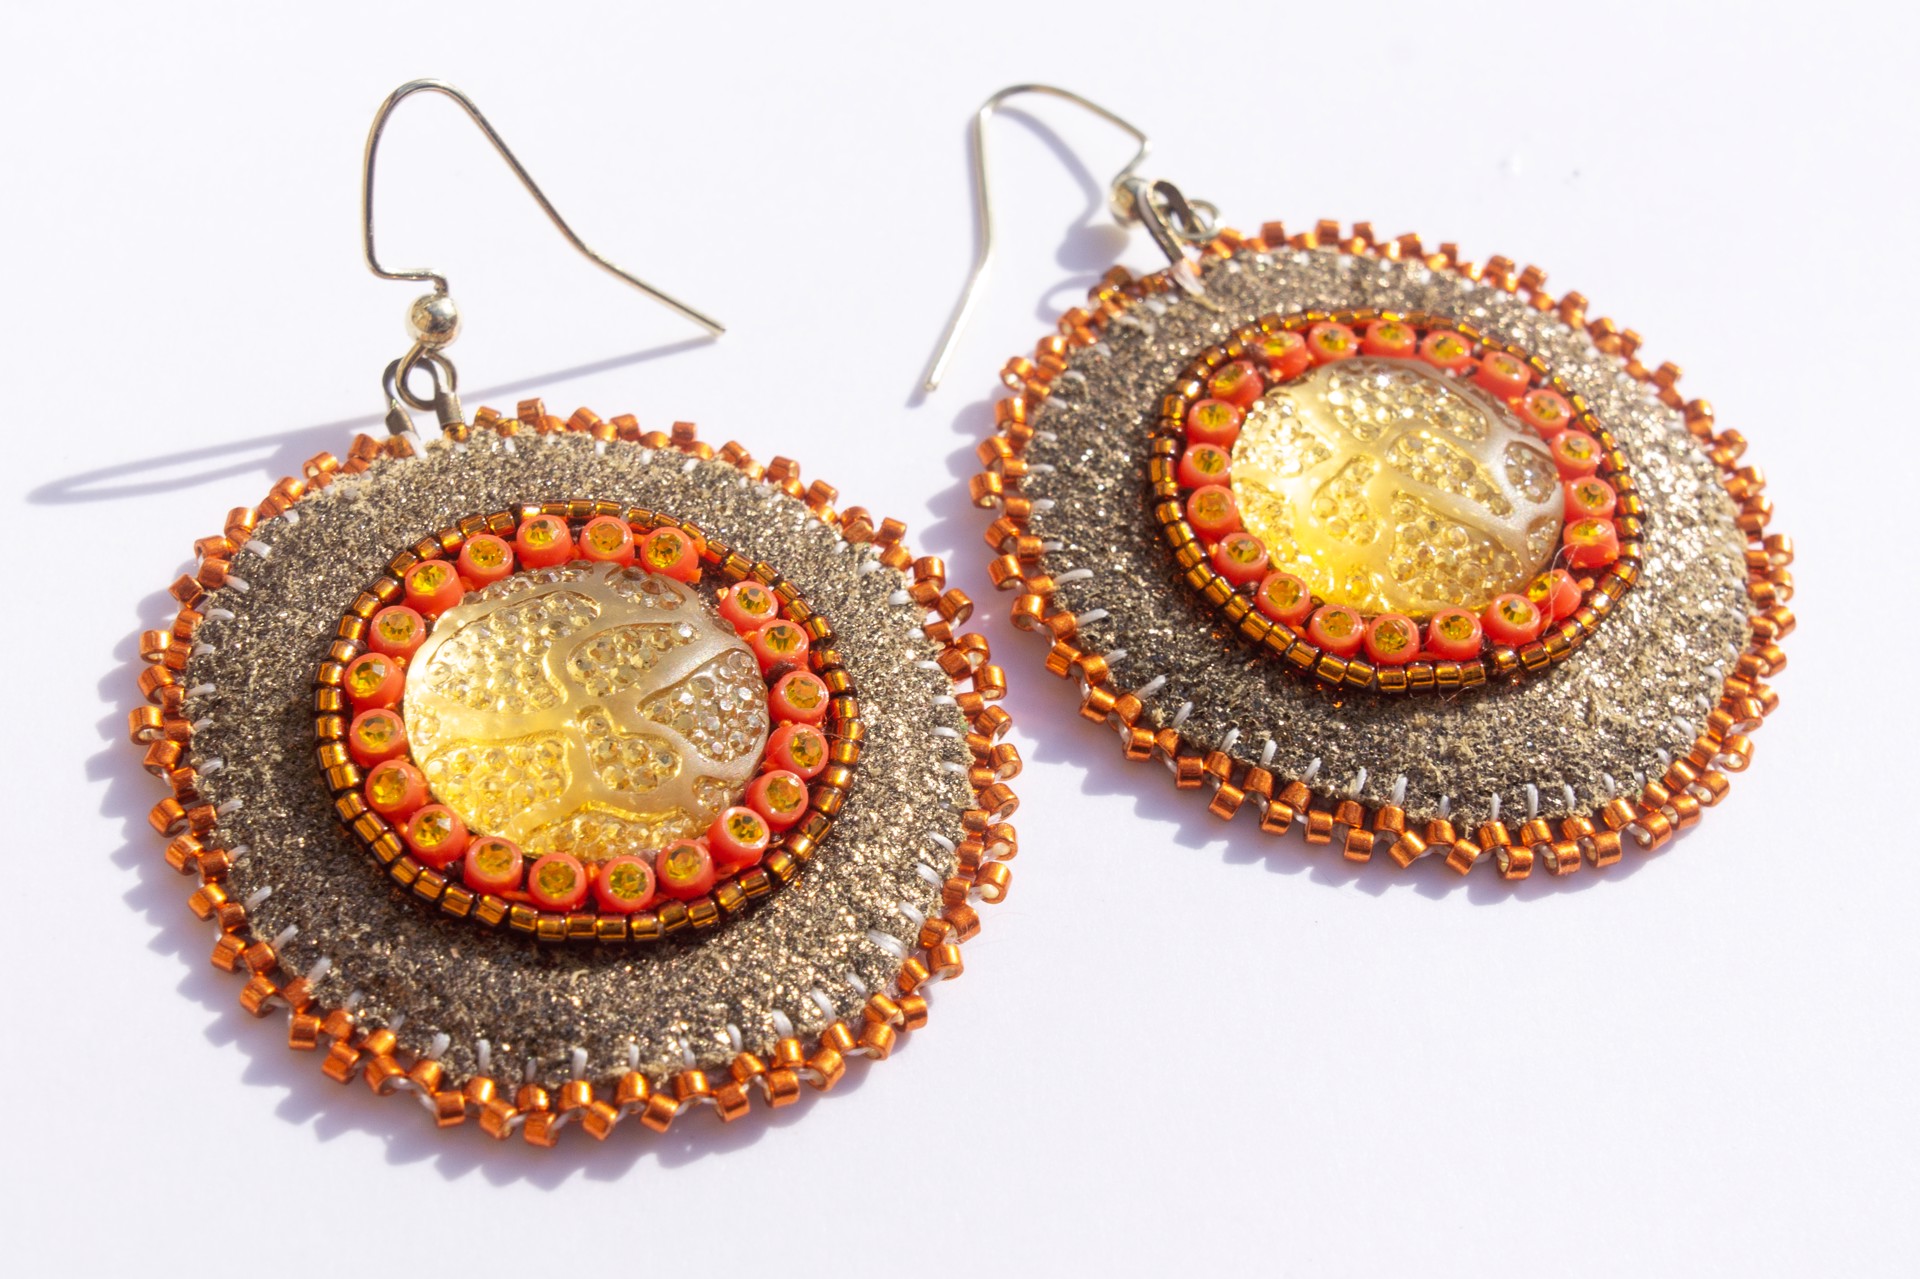 Gold and orange earrings by Hattie Lee Mendoza